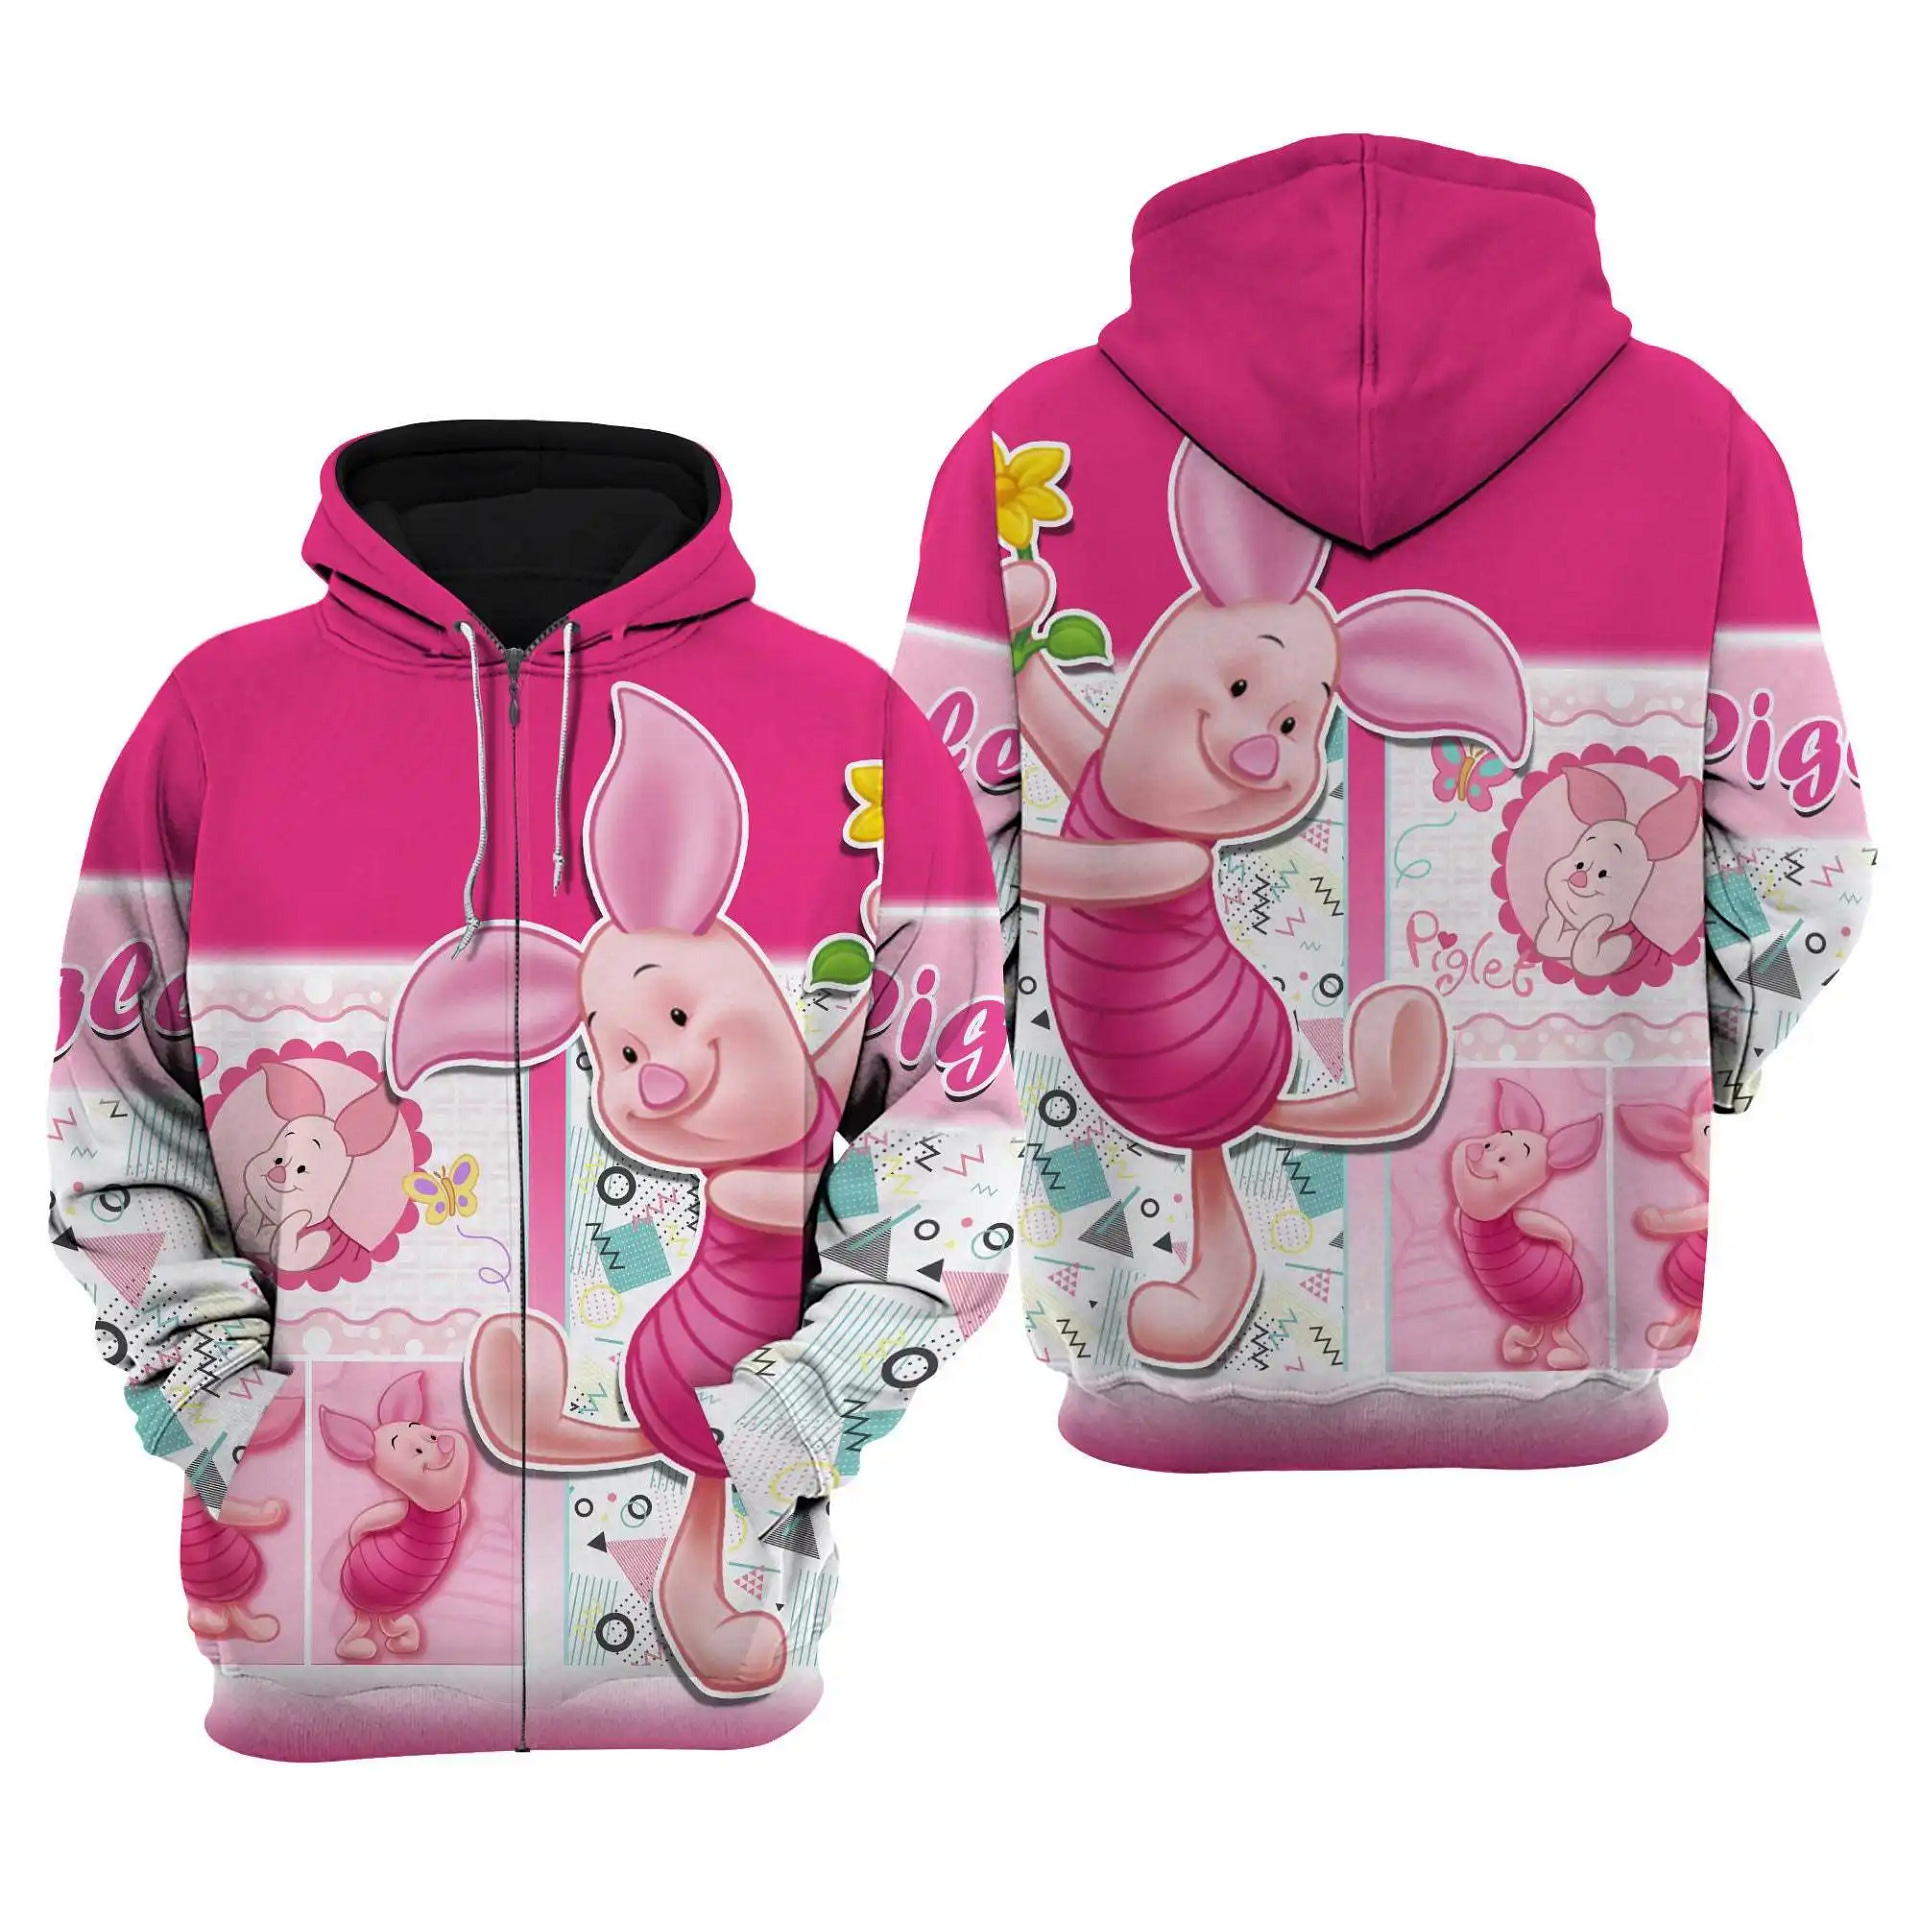 Pink Piglet Winnie The Pooh Disney Graphic Cartoon Outfits Clothing Men Women Kids Toddlers Hoodie 3D